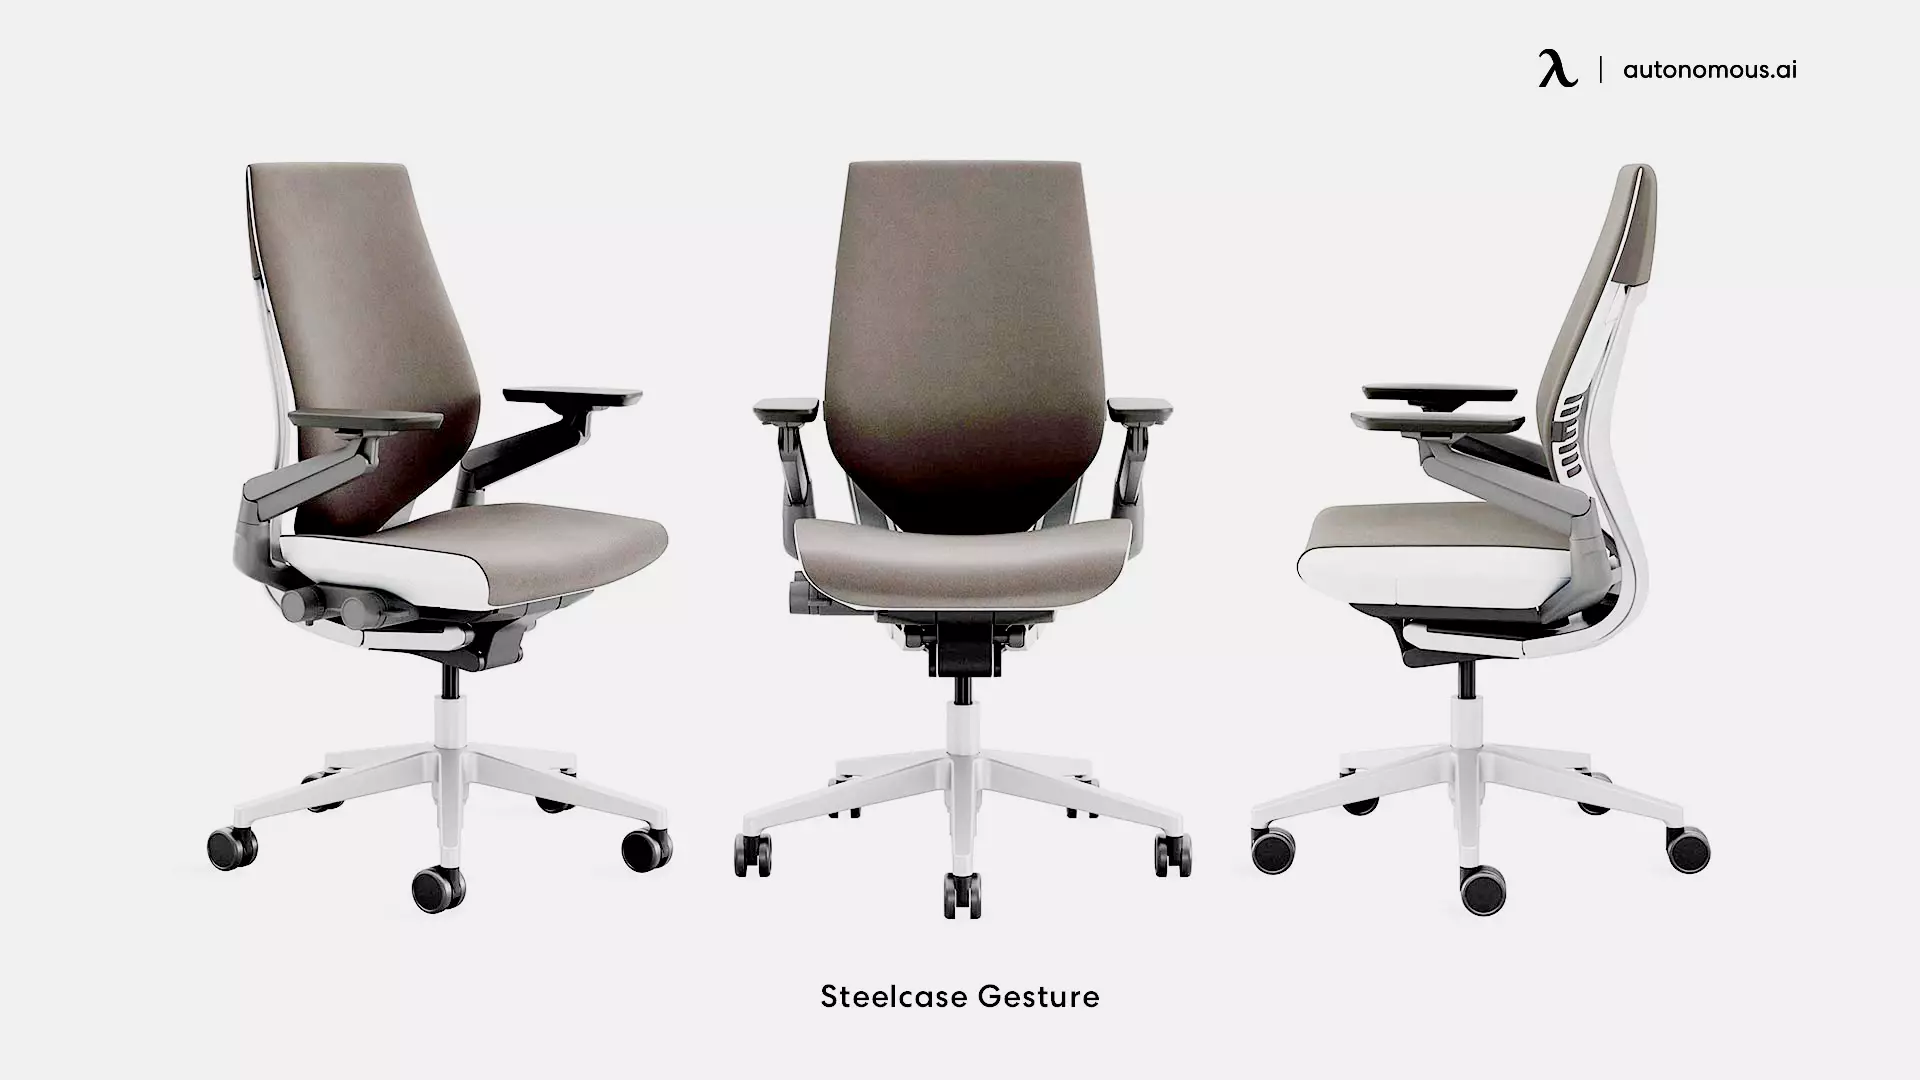 Steelcase Gesture Arm Chair office chair 250 lbs